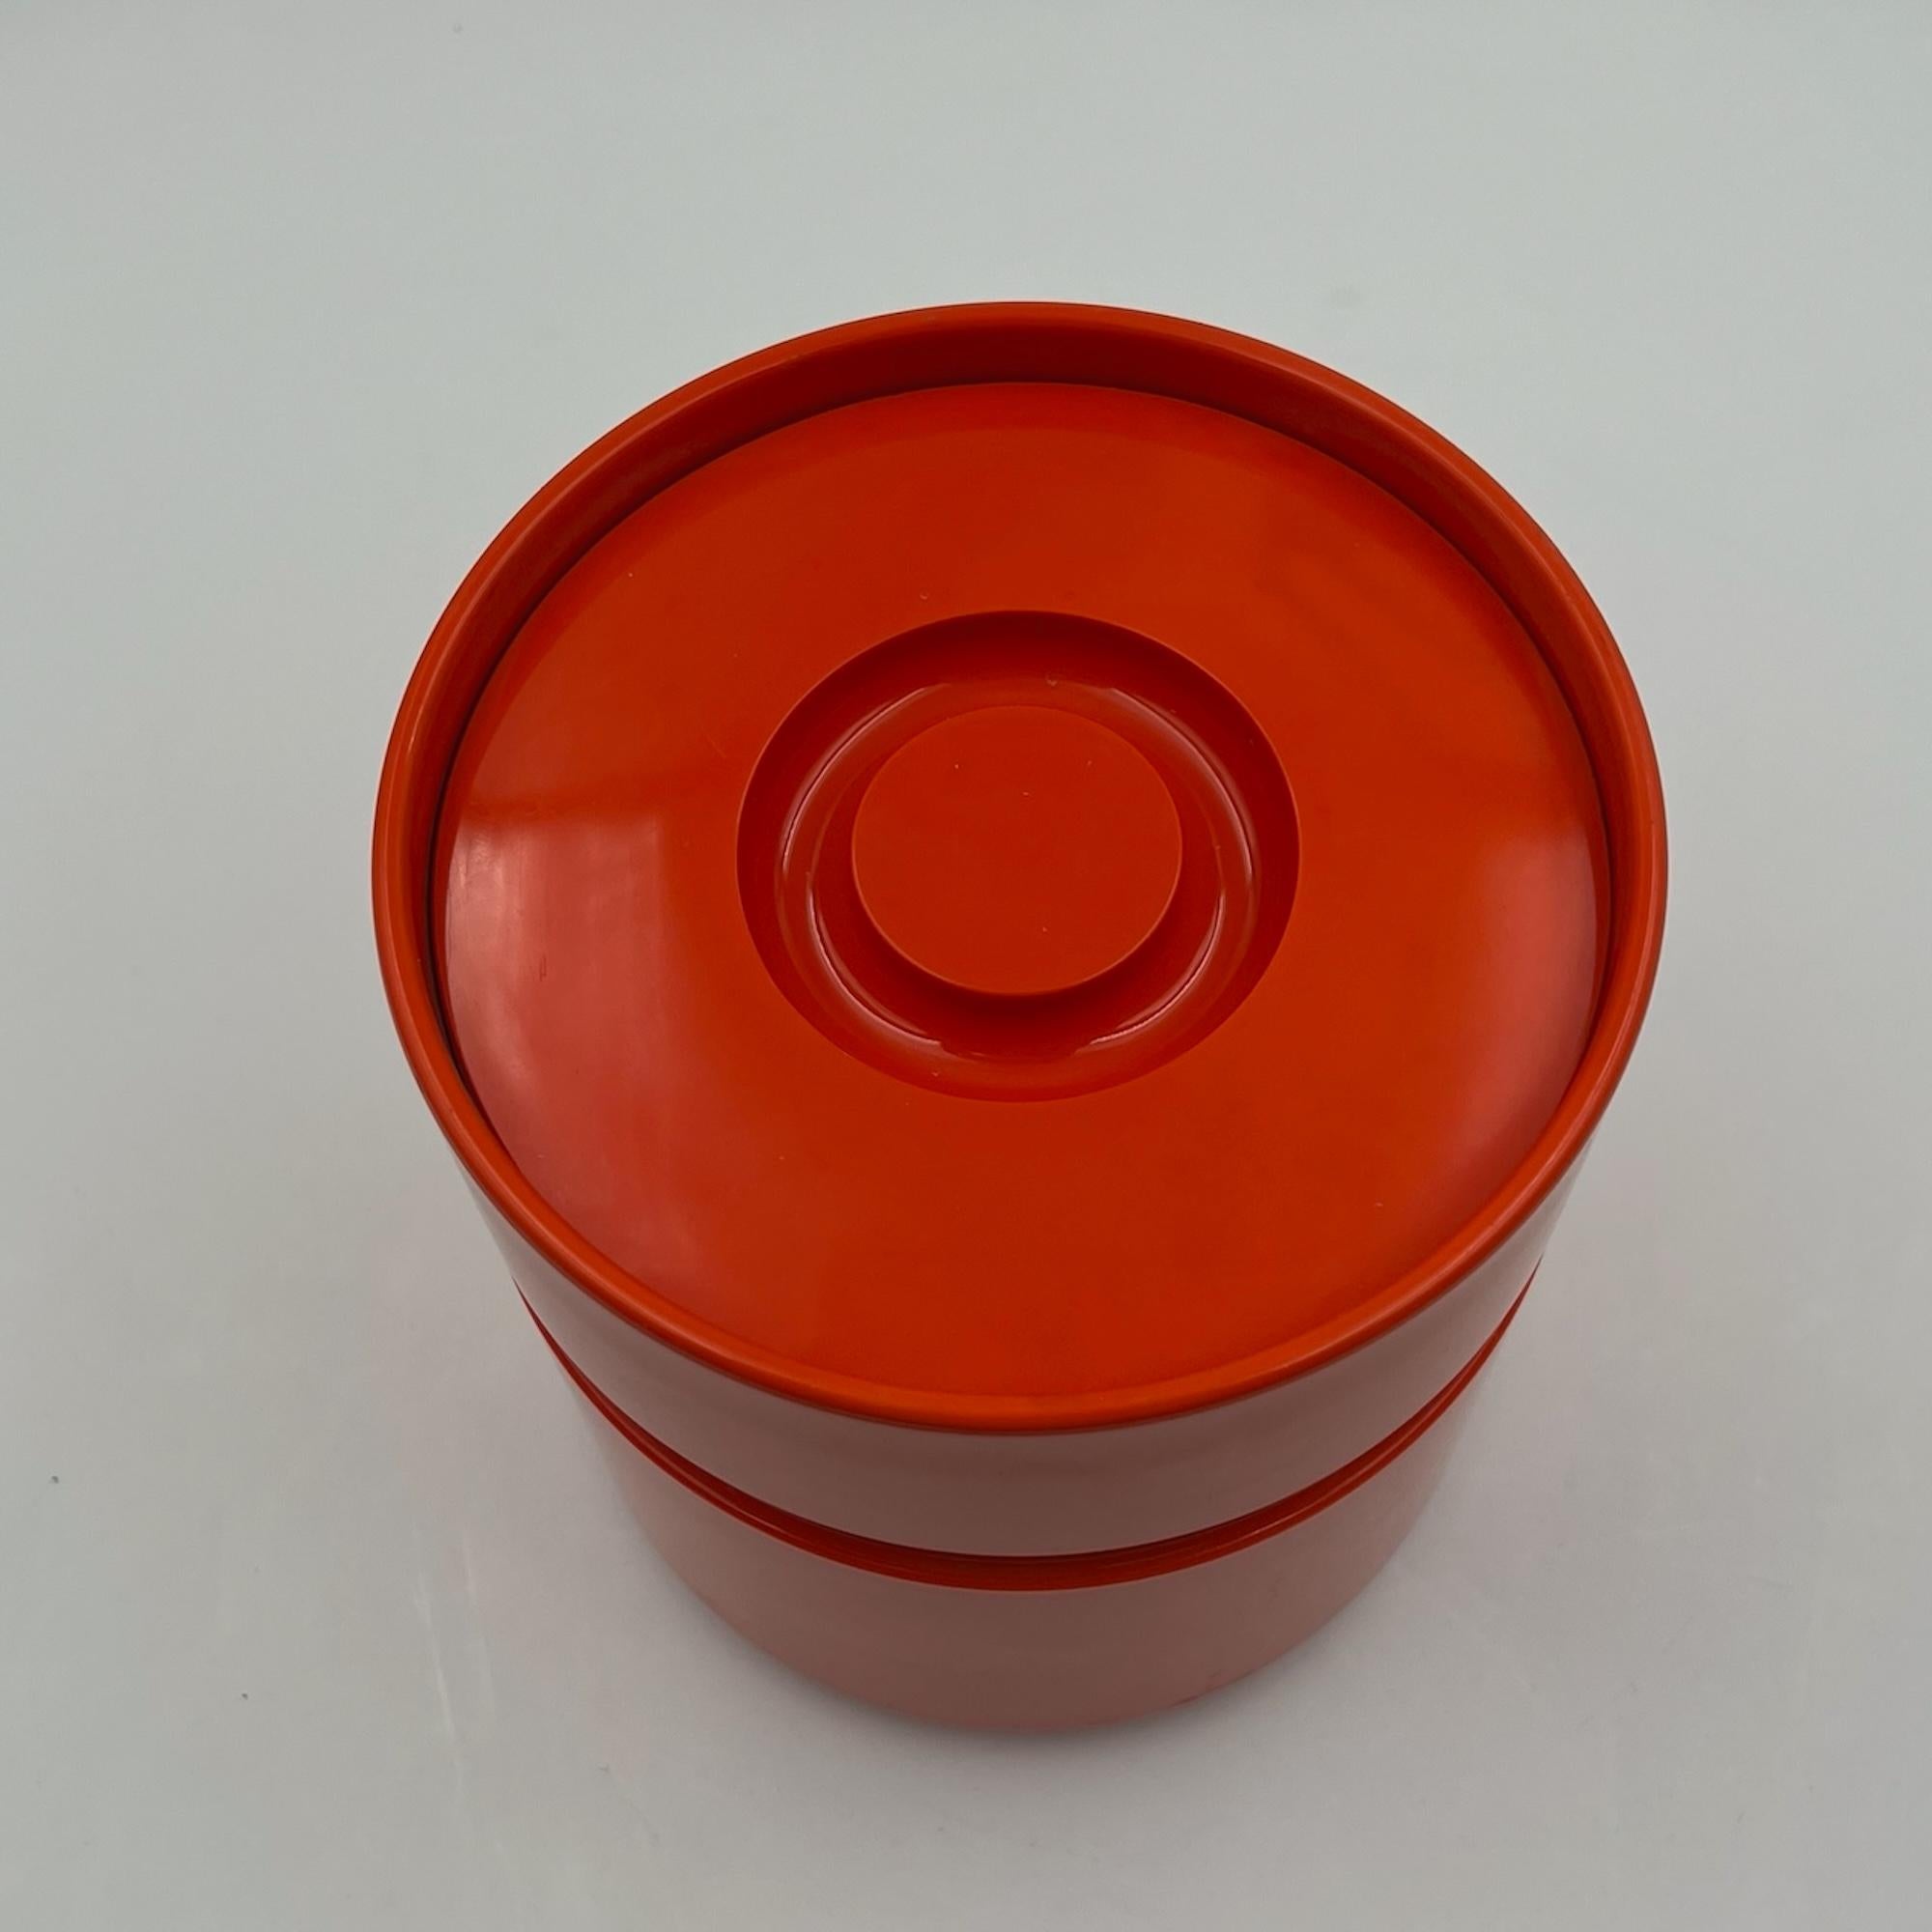 70s Orange Ice Bucket Sergio Asti for Heller - Iconic Italian Design Tableware 1